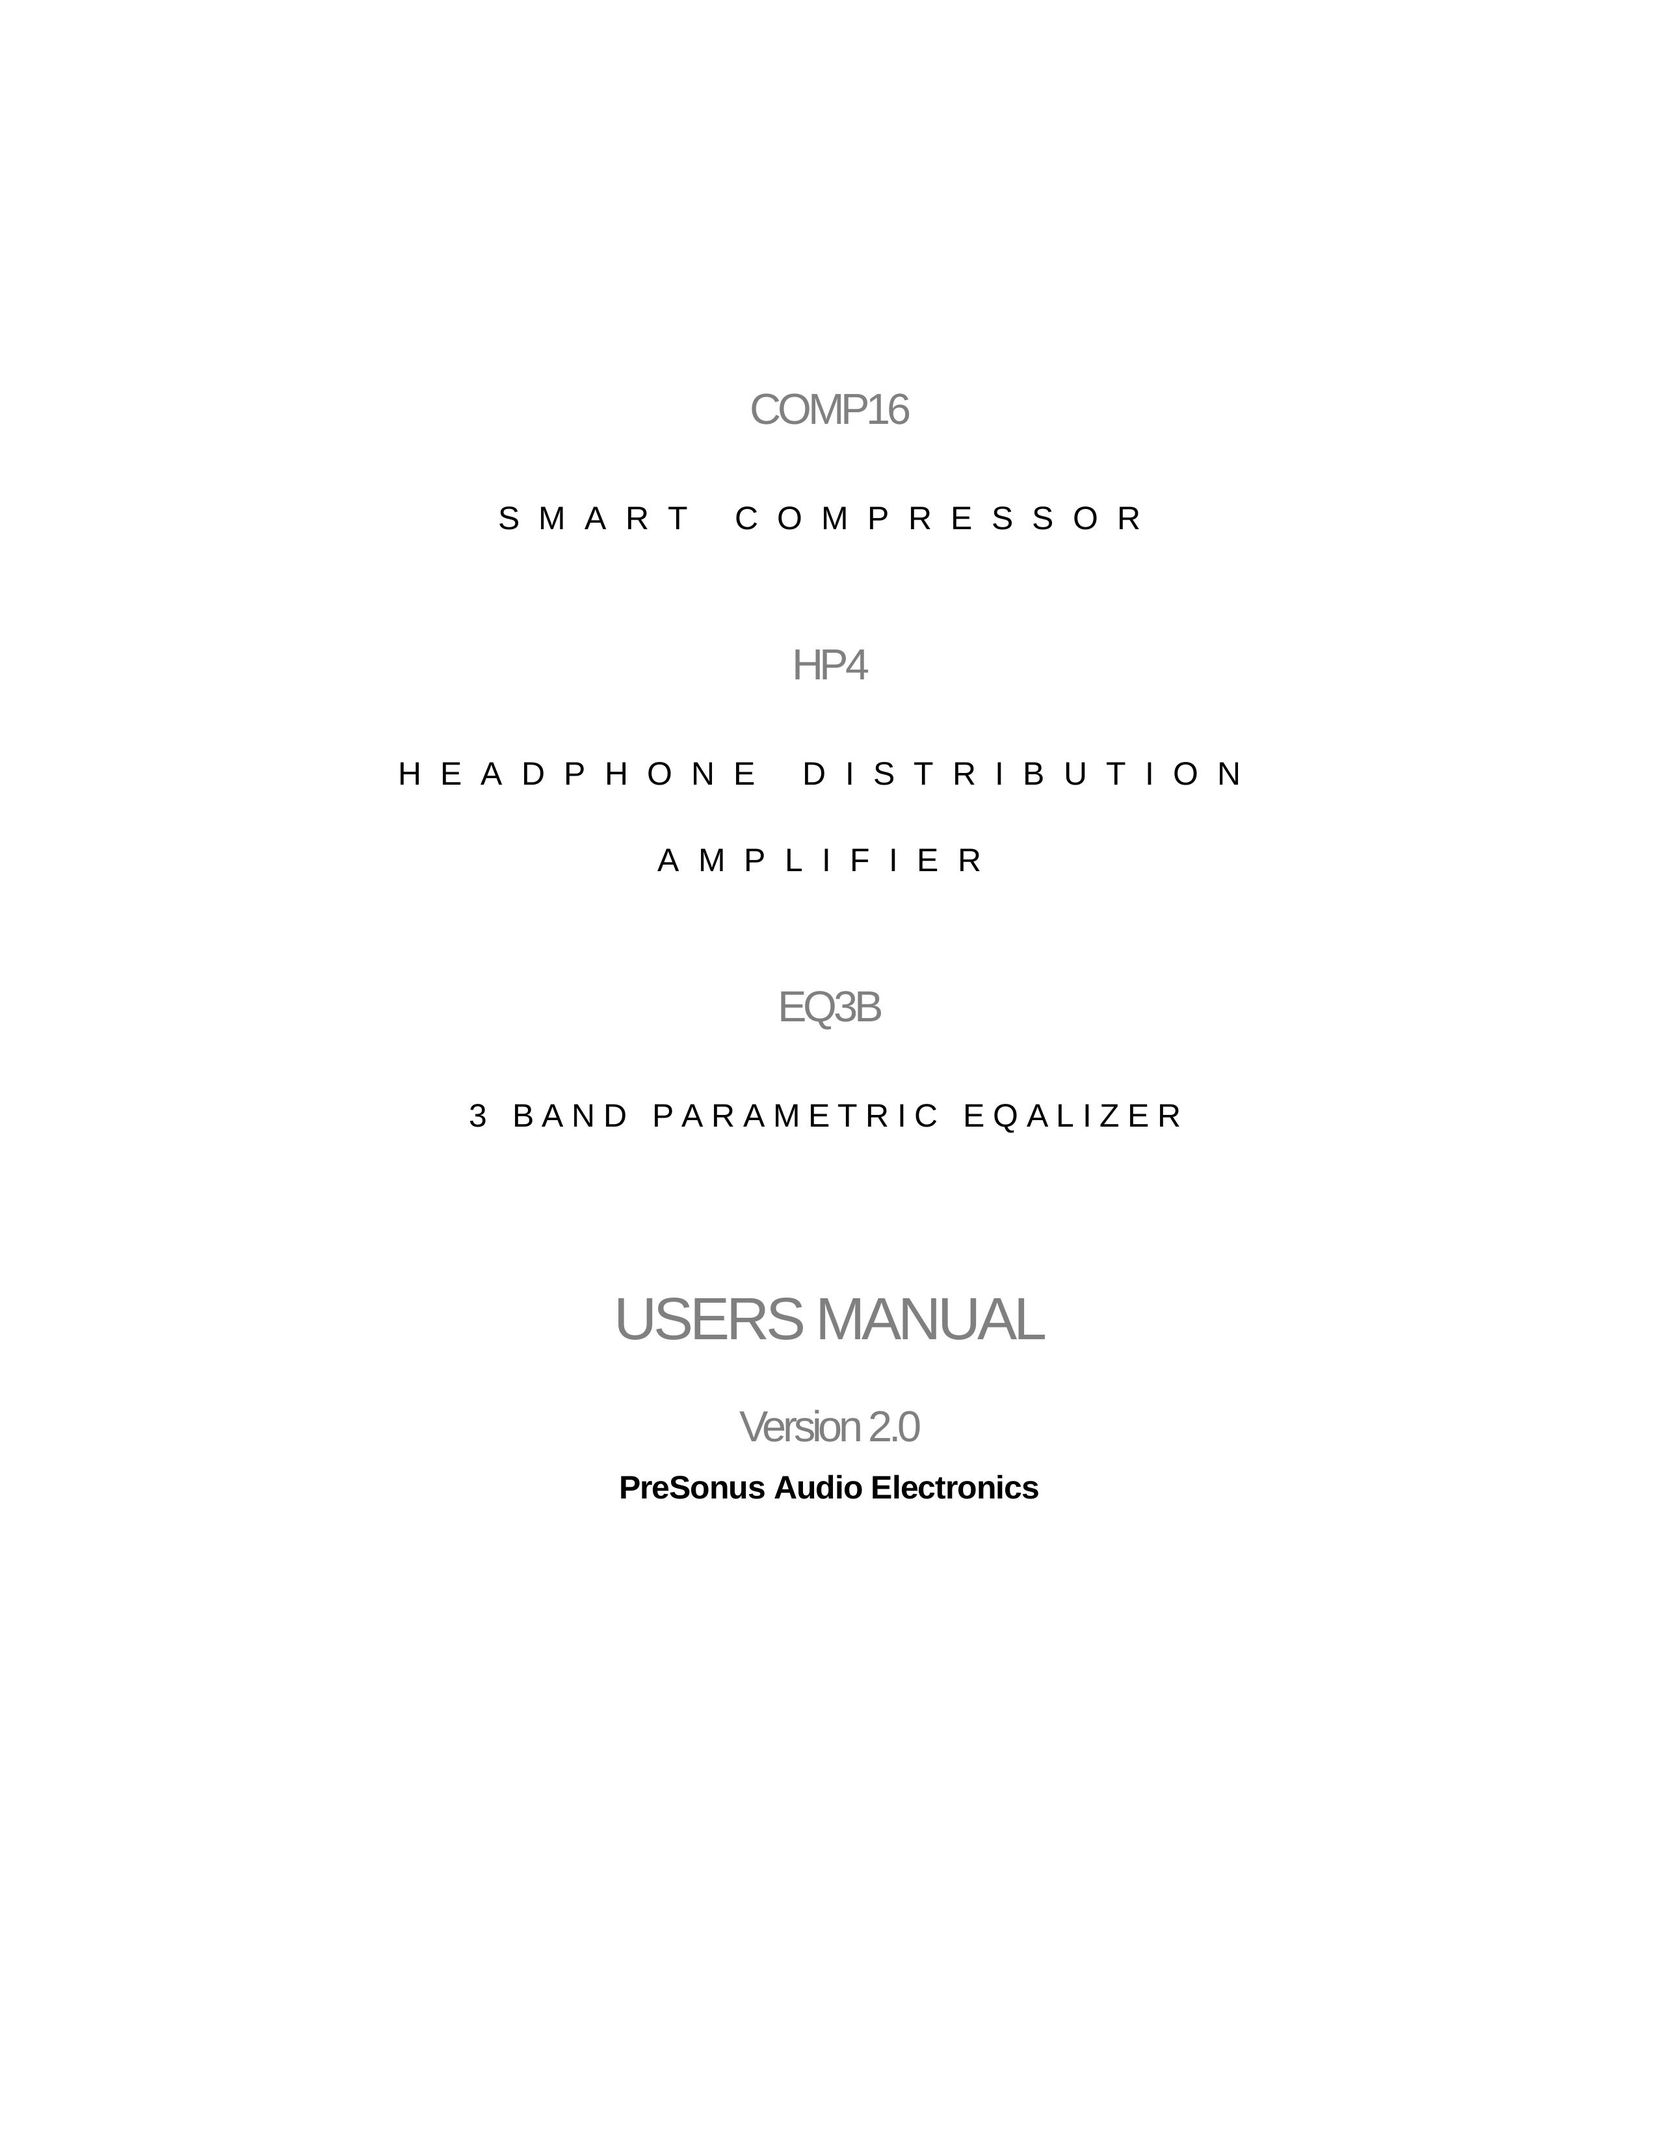 Presonus Audio electronic COMP16 Stereo Amplifier User Manual